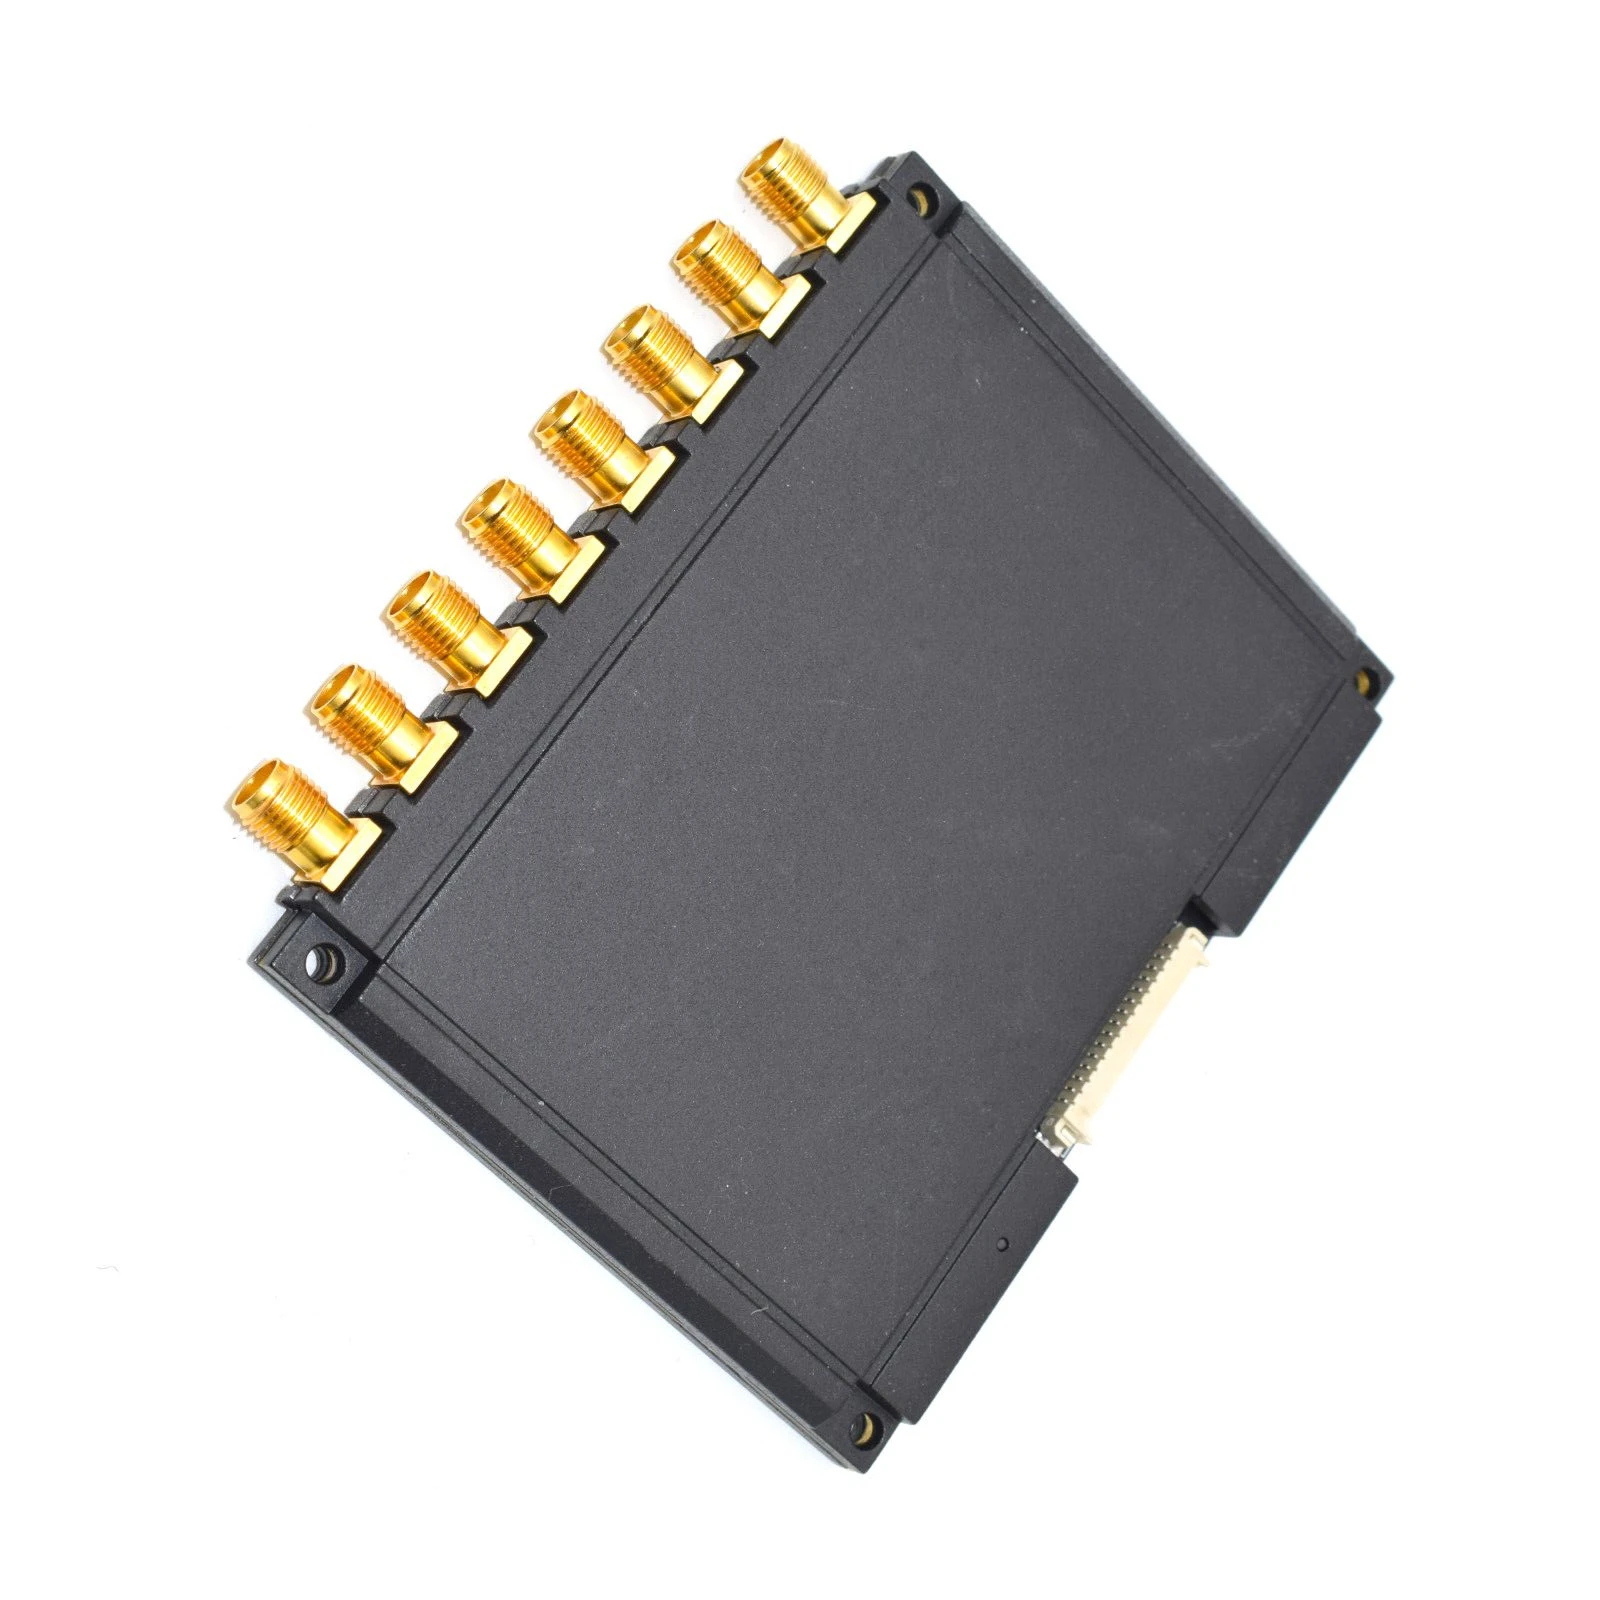 

Embedded System UHF RFID Module TTL UART TCP IP 1-30M Long Range RFID Reader Module UHF 4 Ports E710 LTE Chip Free C# Java SDK